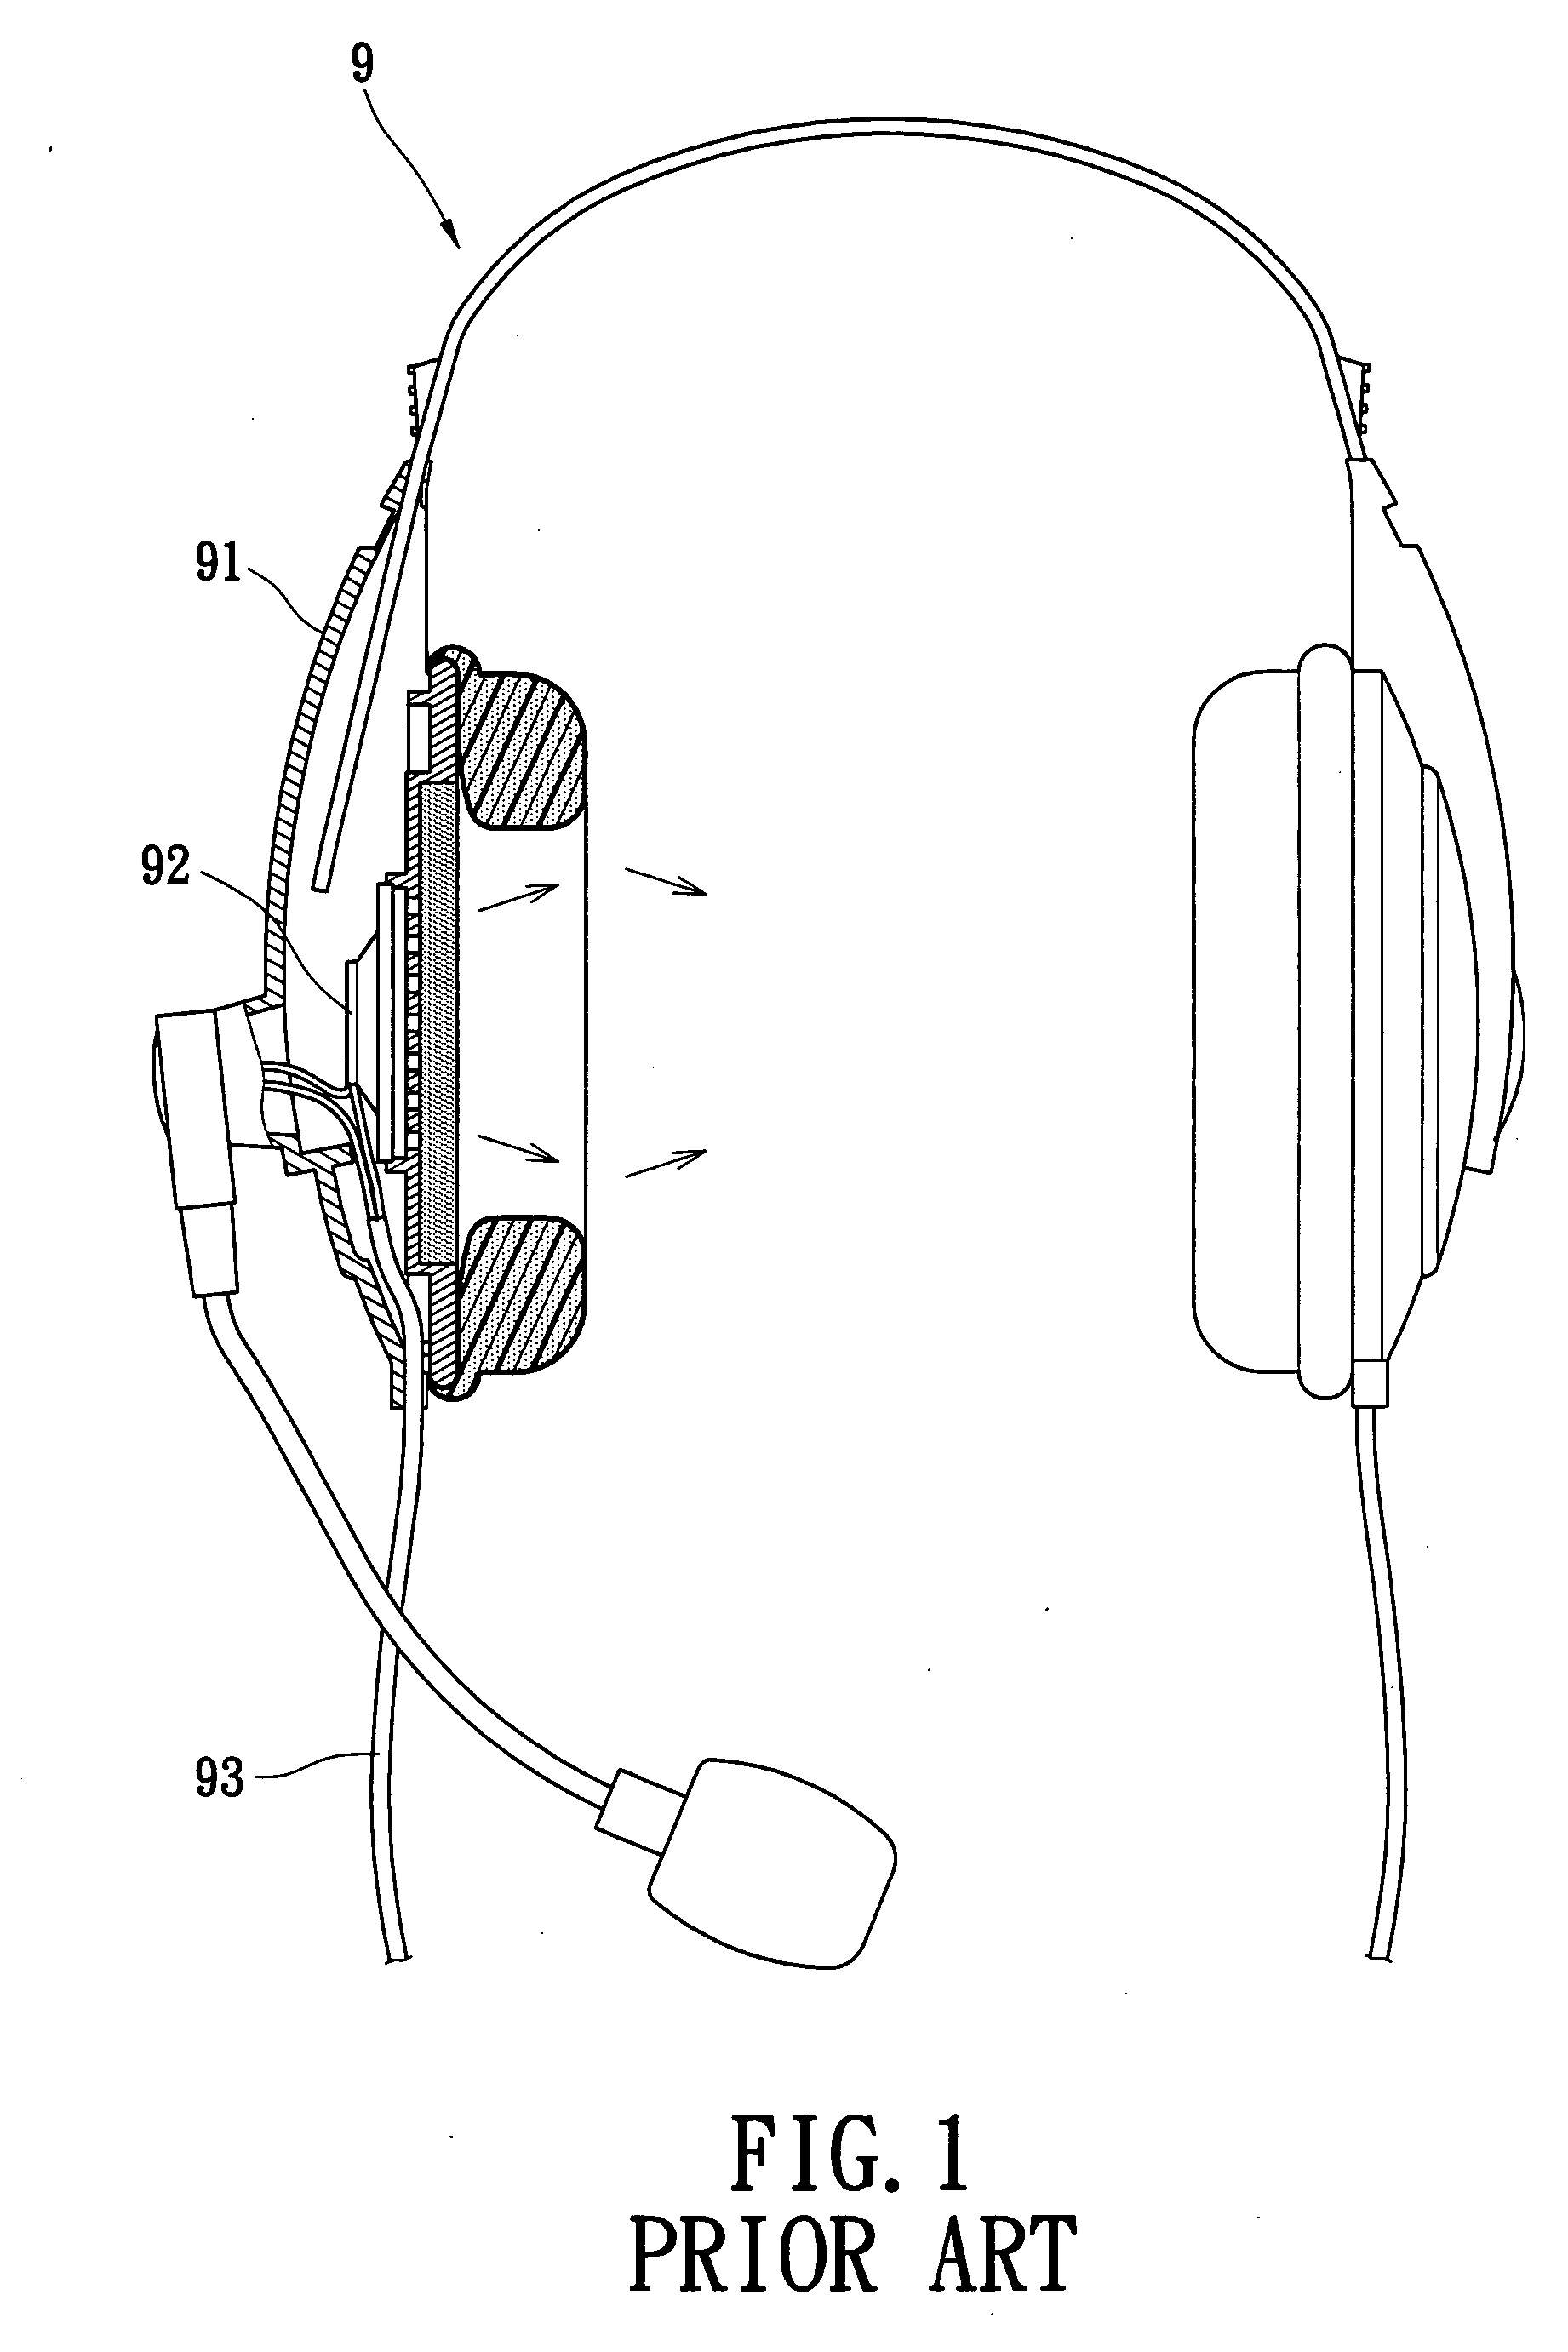 Earphone device having composite functions